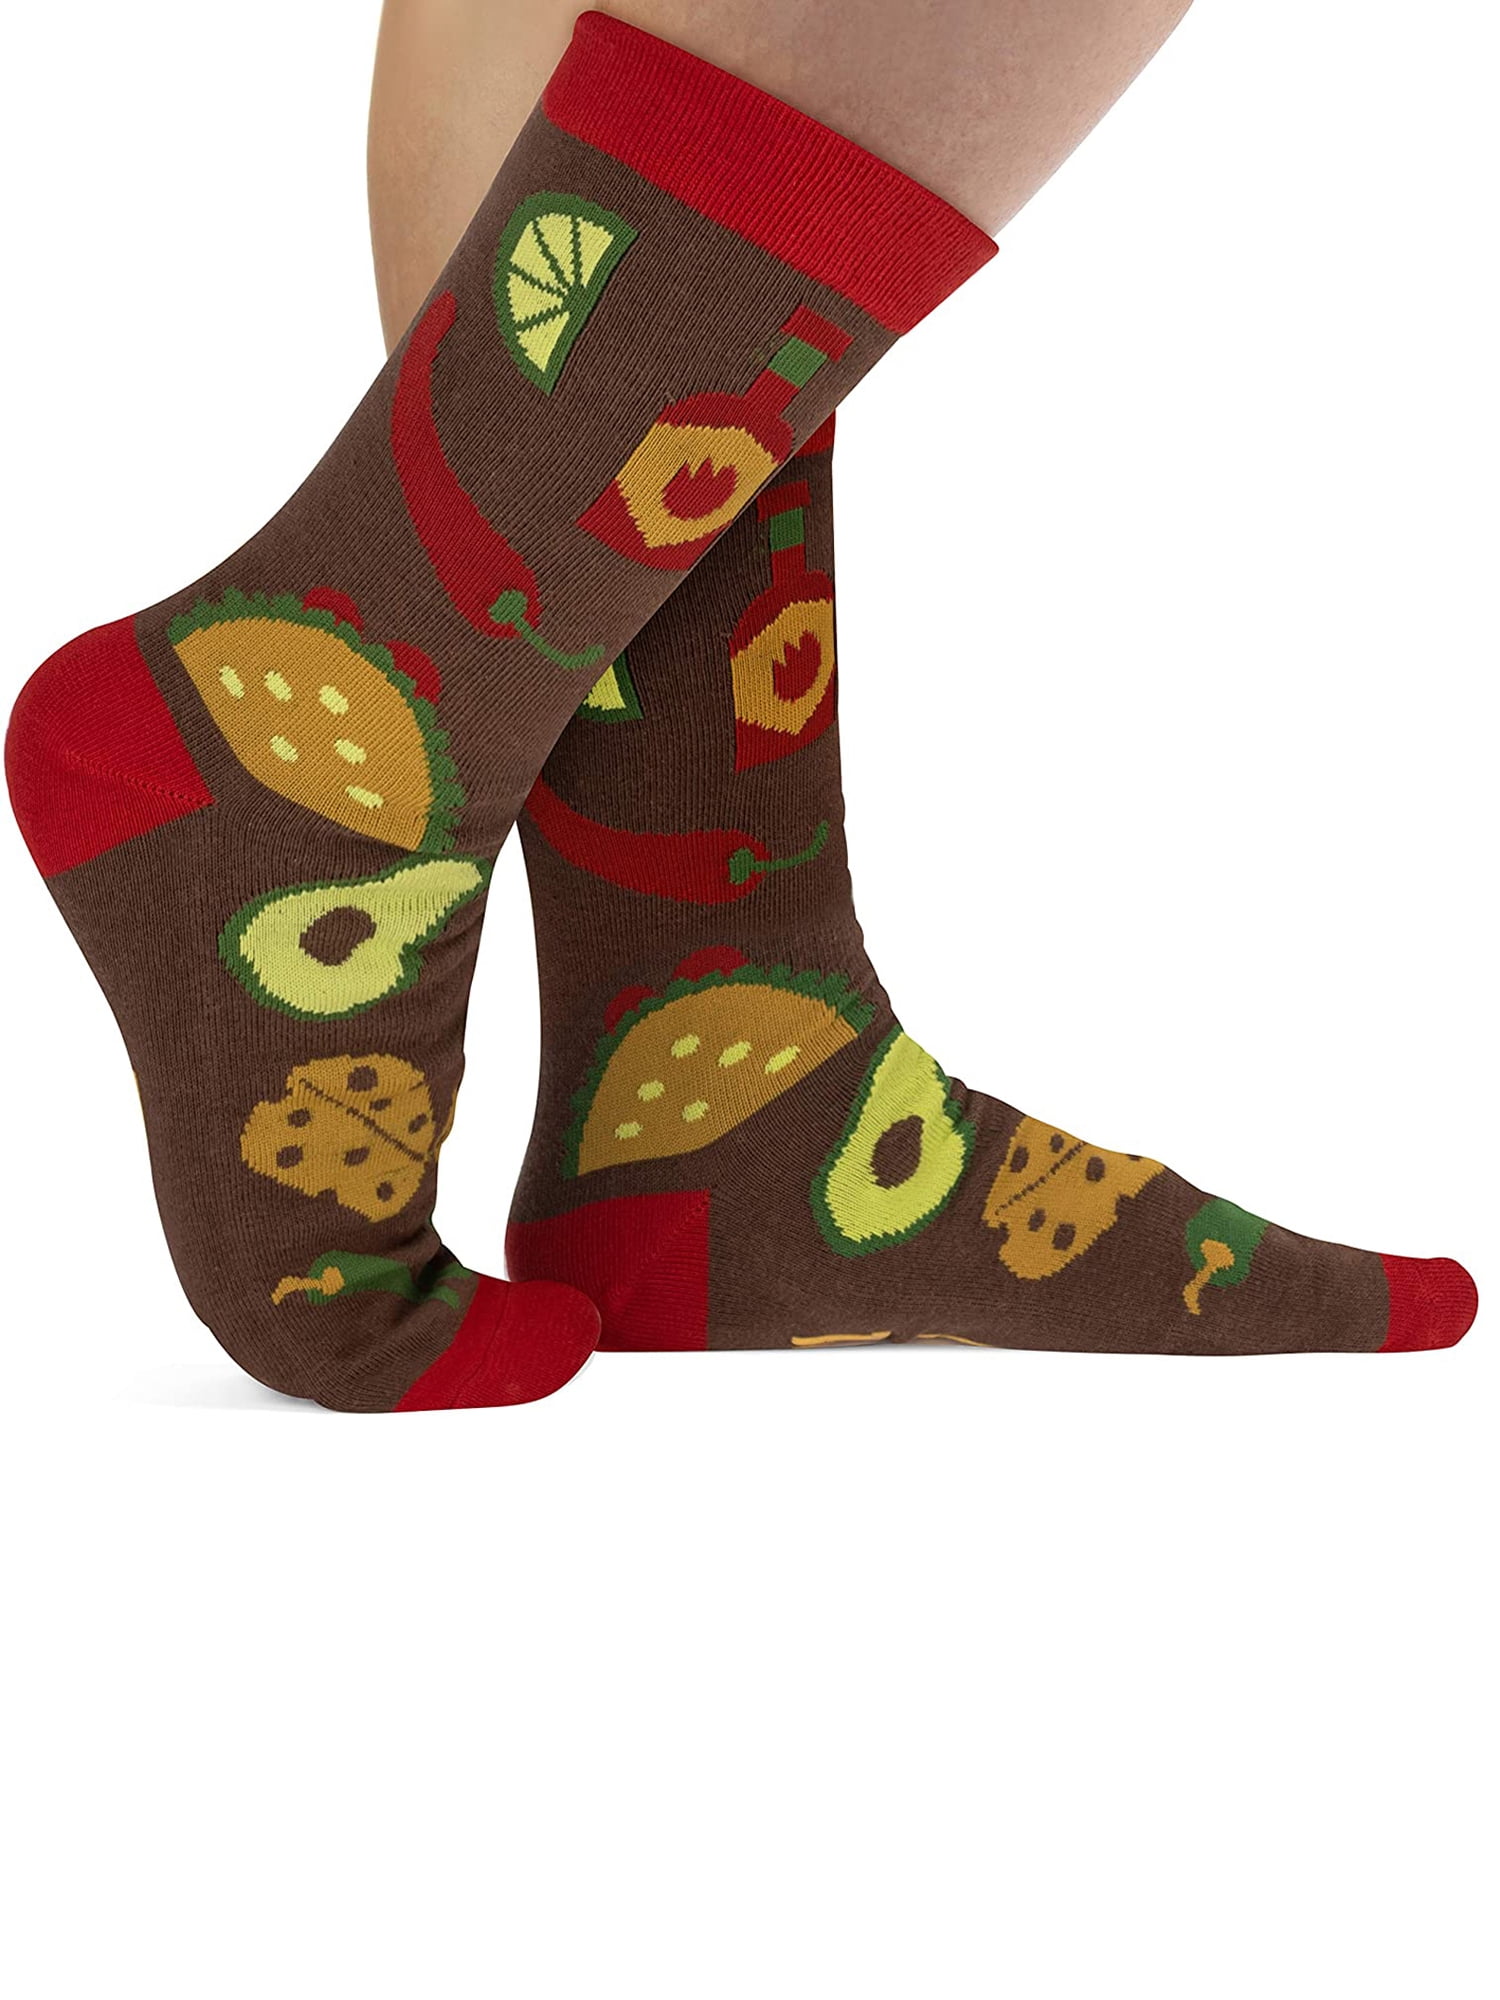 URECOVER Golf Socks Stocking Stuffers for Men Women Socks Funny Novelty  Christmas Gifts Adults Teenage Teen Boy